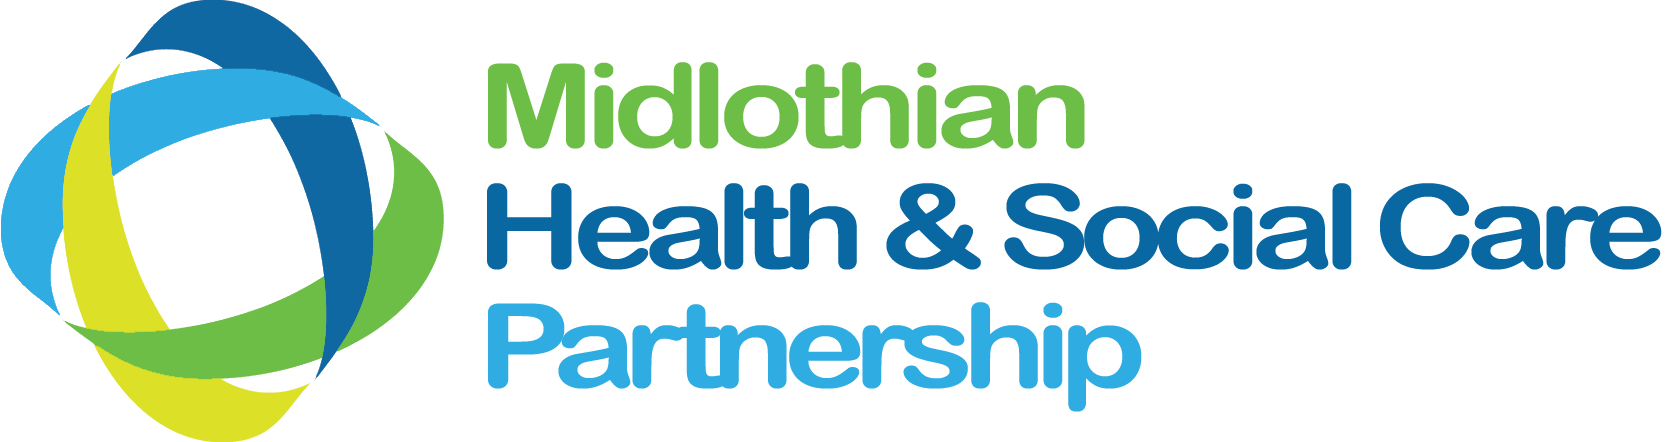 Midlothian Health and Social Care Partnership